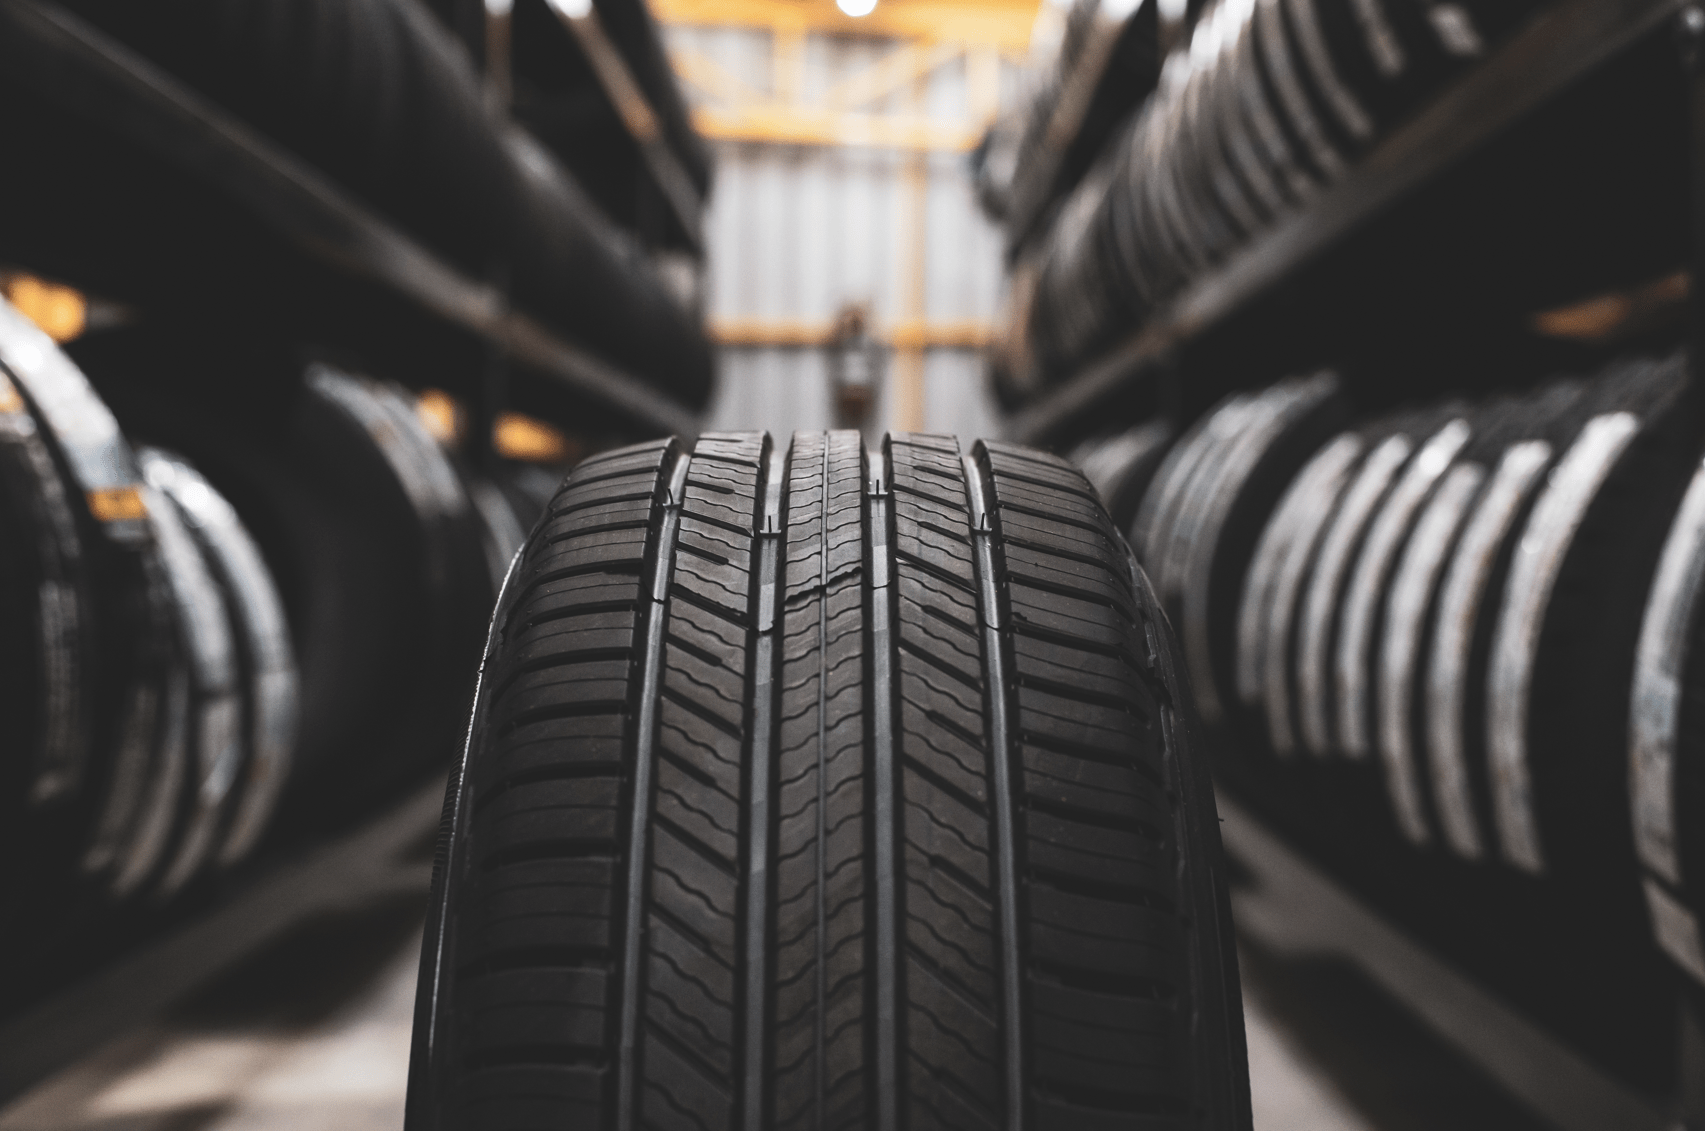 6 Factors To Consider When Choosing Tires